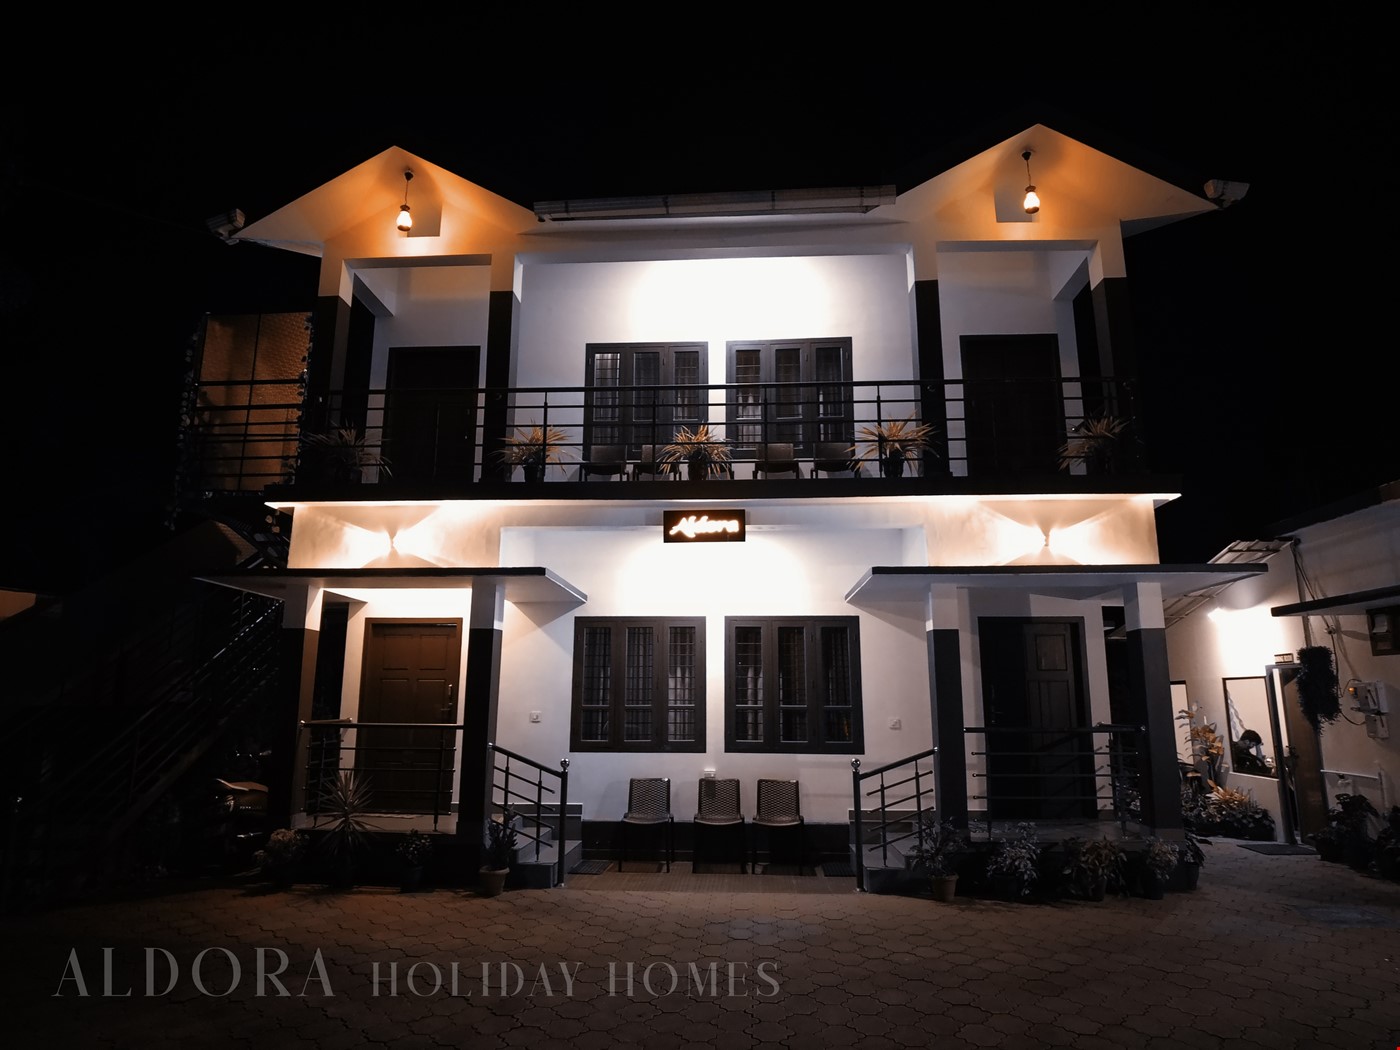 Aldora Holiday Homes image